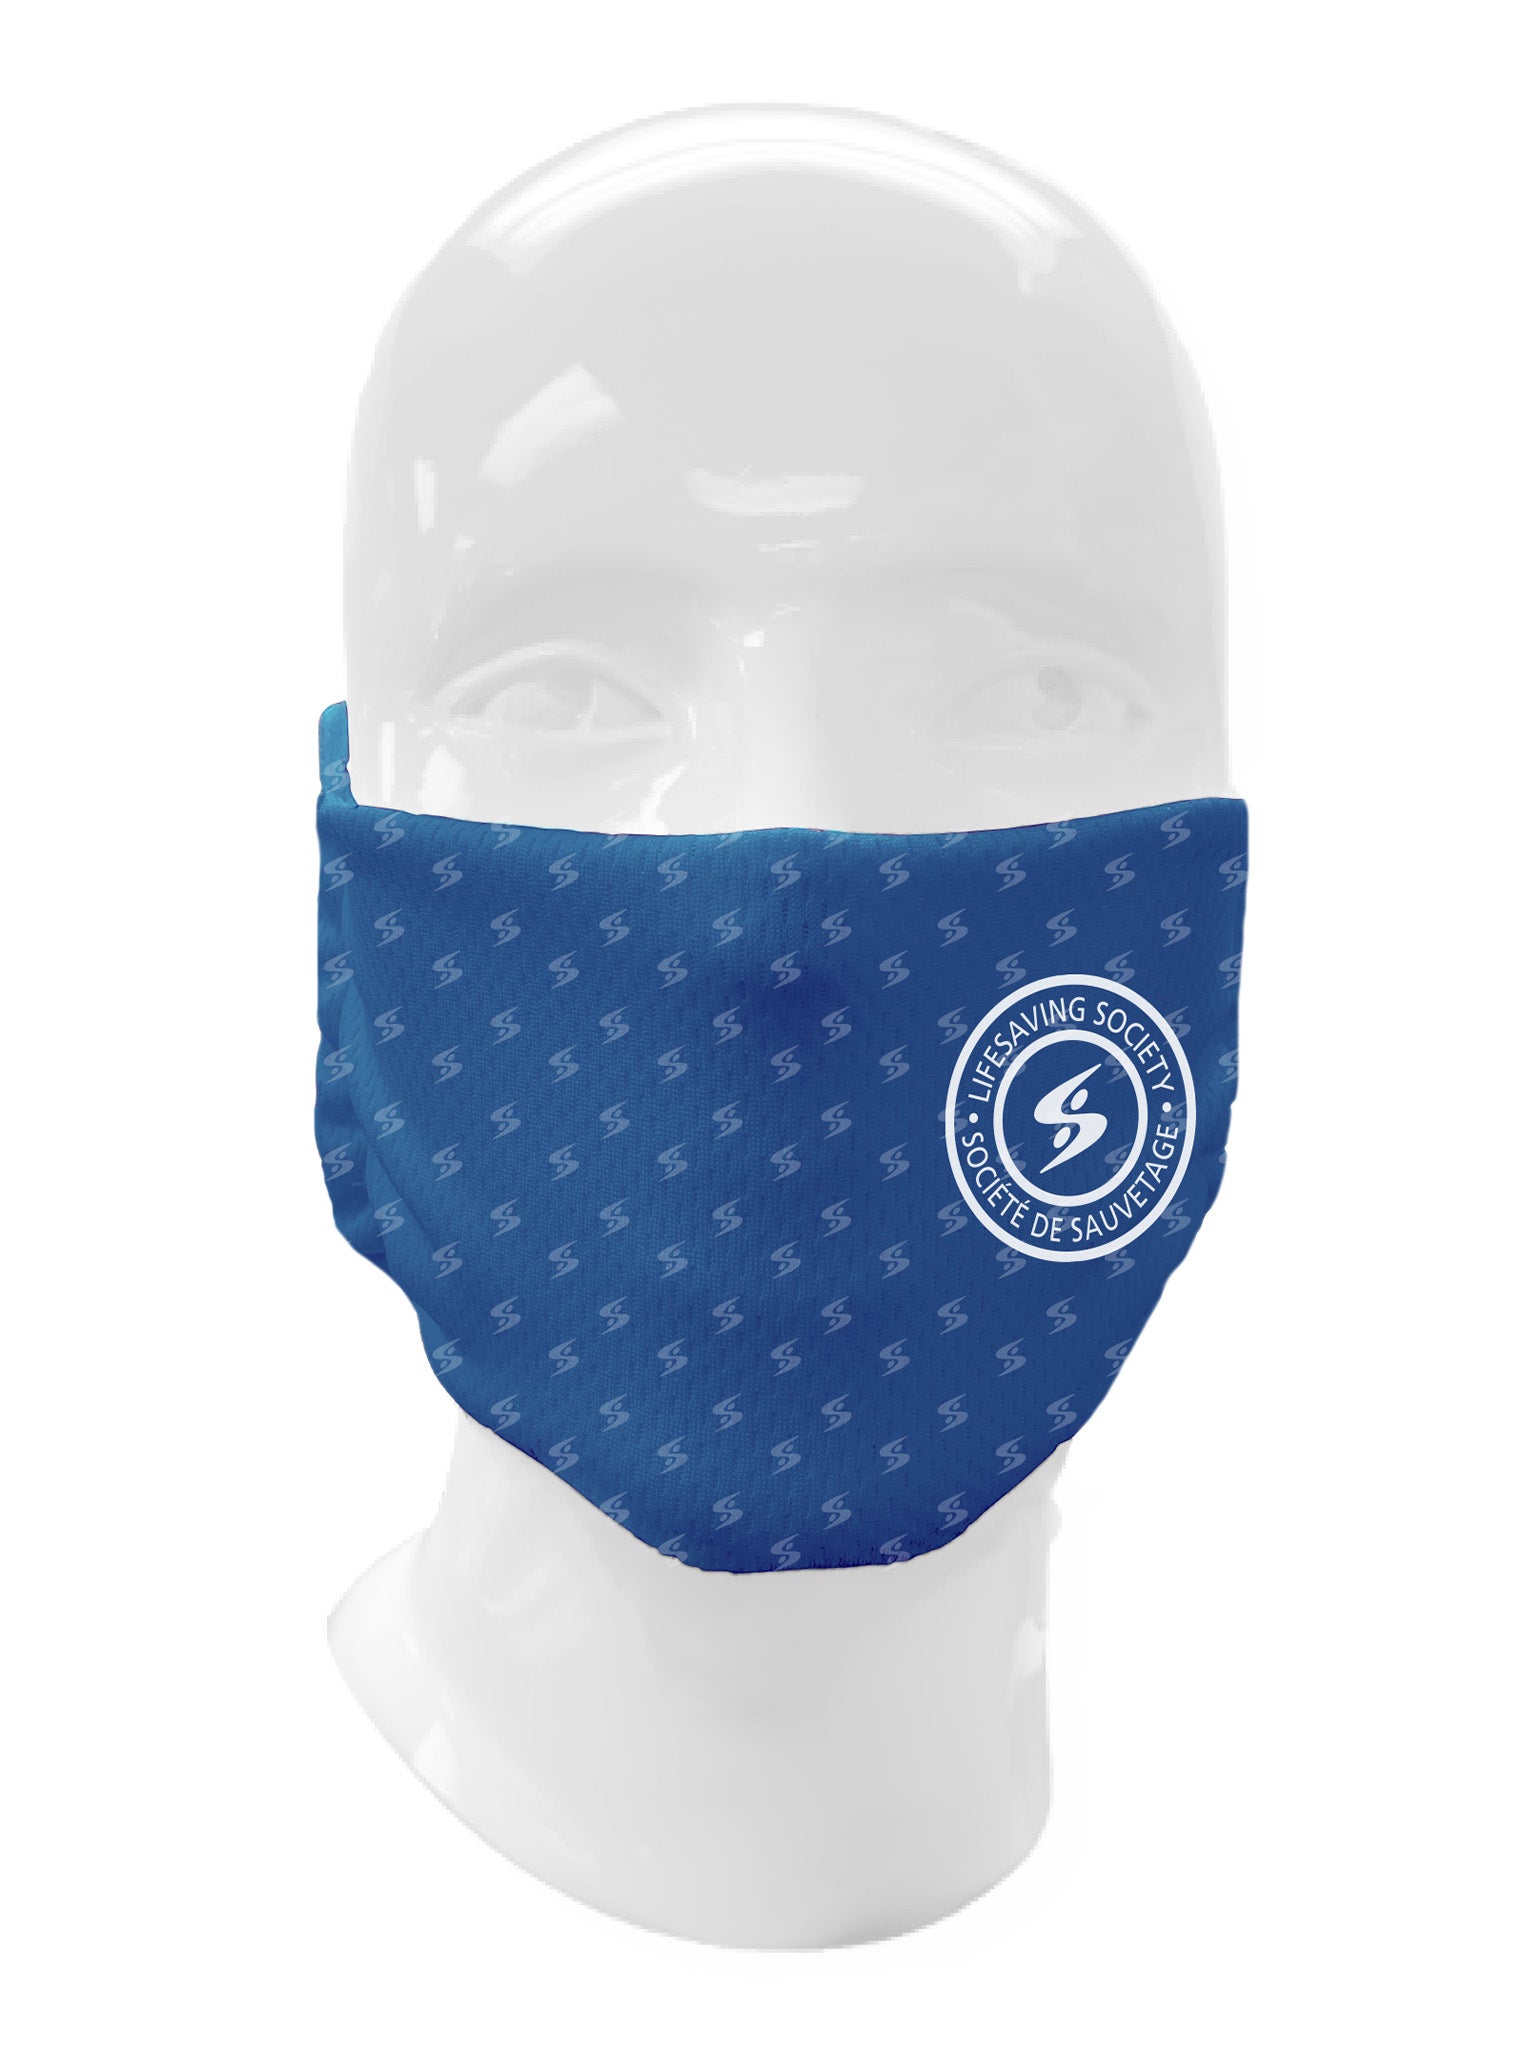 Masque société de sauvetage - Bleu